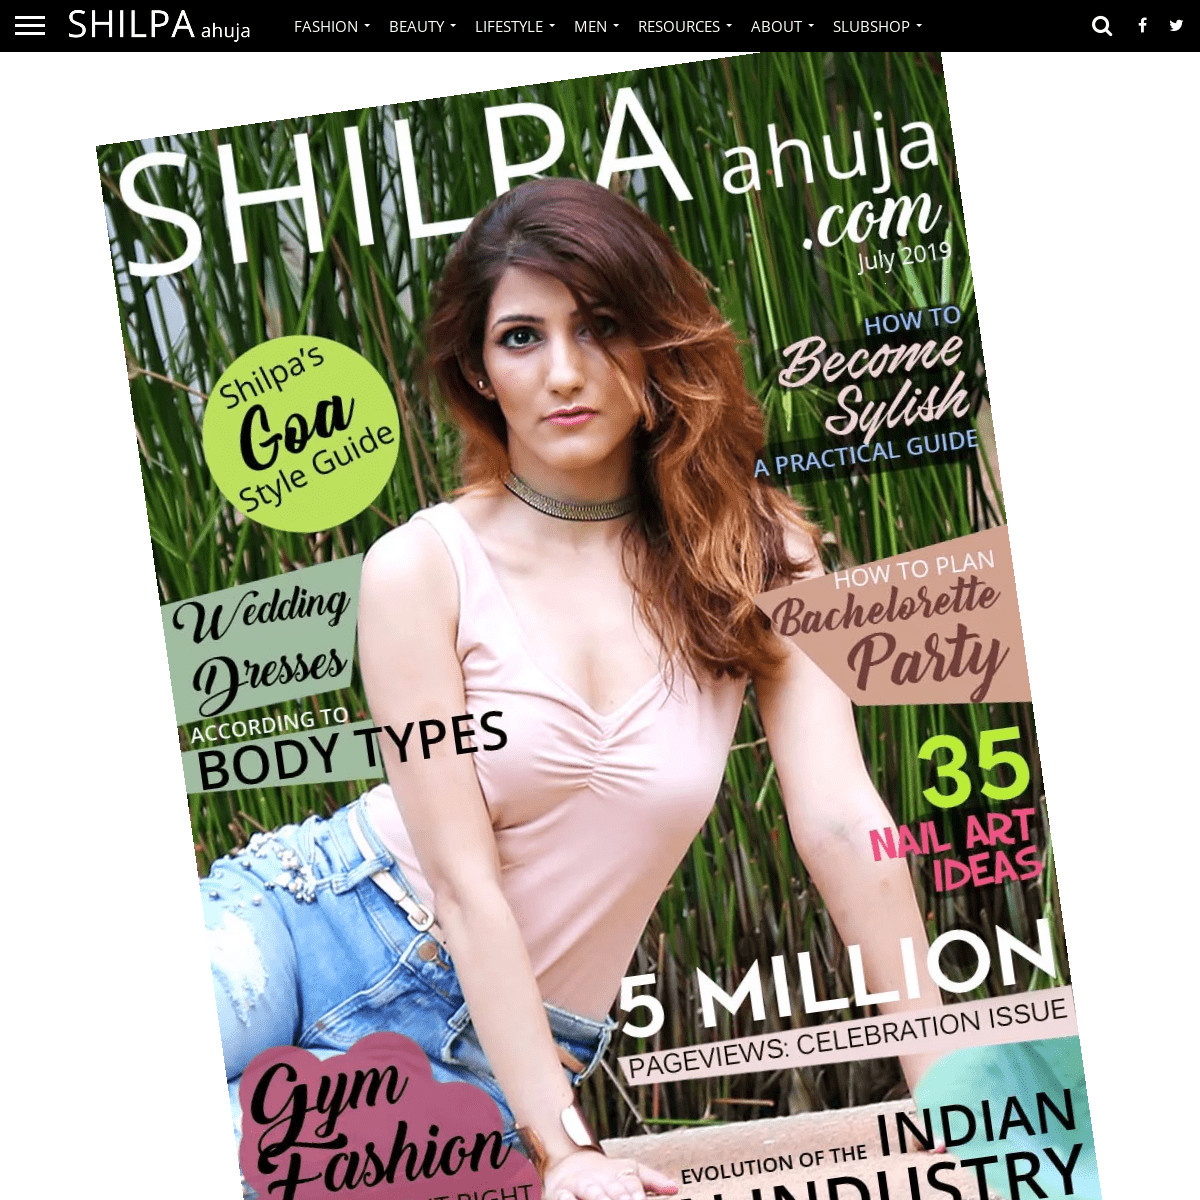 ShilpaAhuja.com: Reporting the Future of Fashion | Fashion Magazine